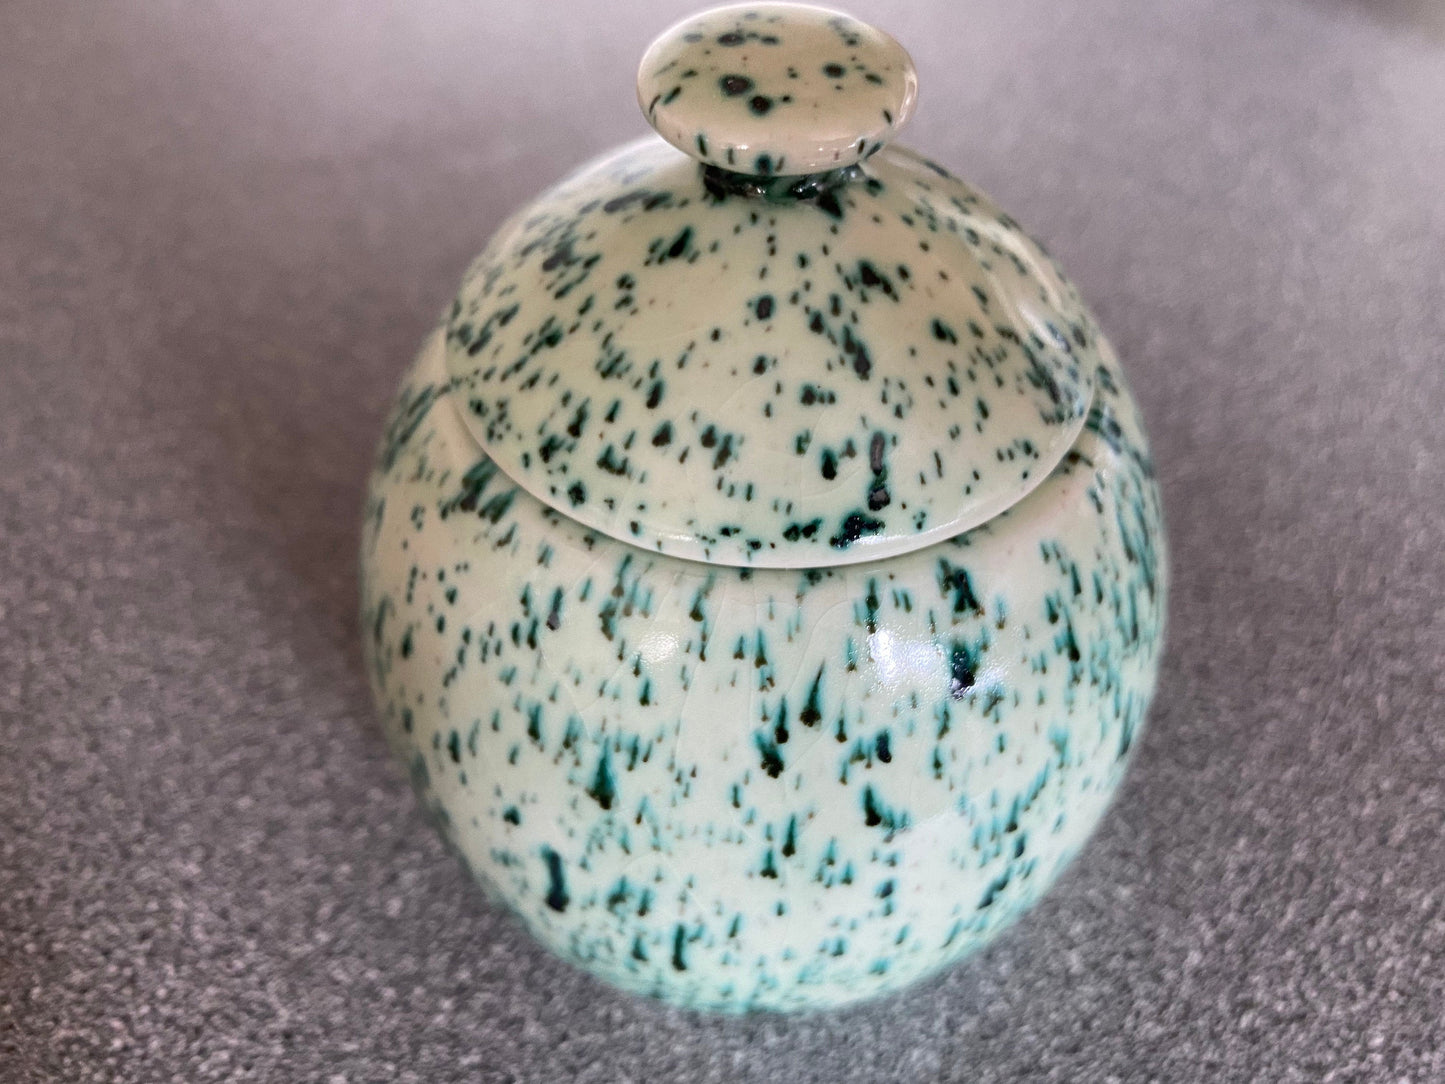 Sugar Bowl with Silver Leafy Spoon Speckled Green Glaze - PeterBowenArt